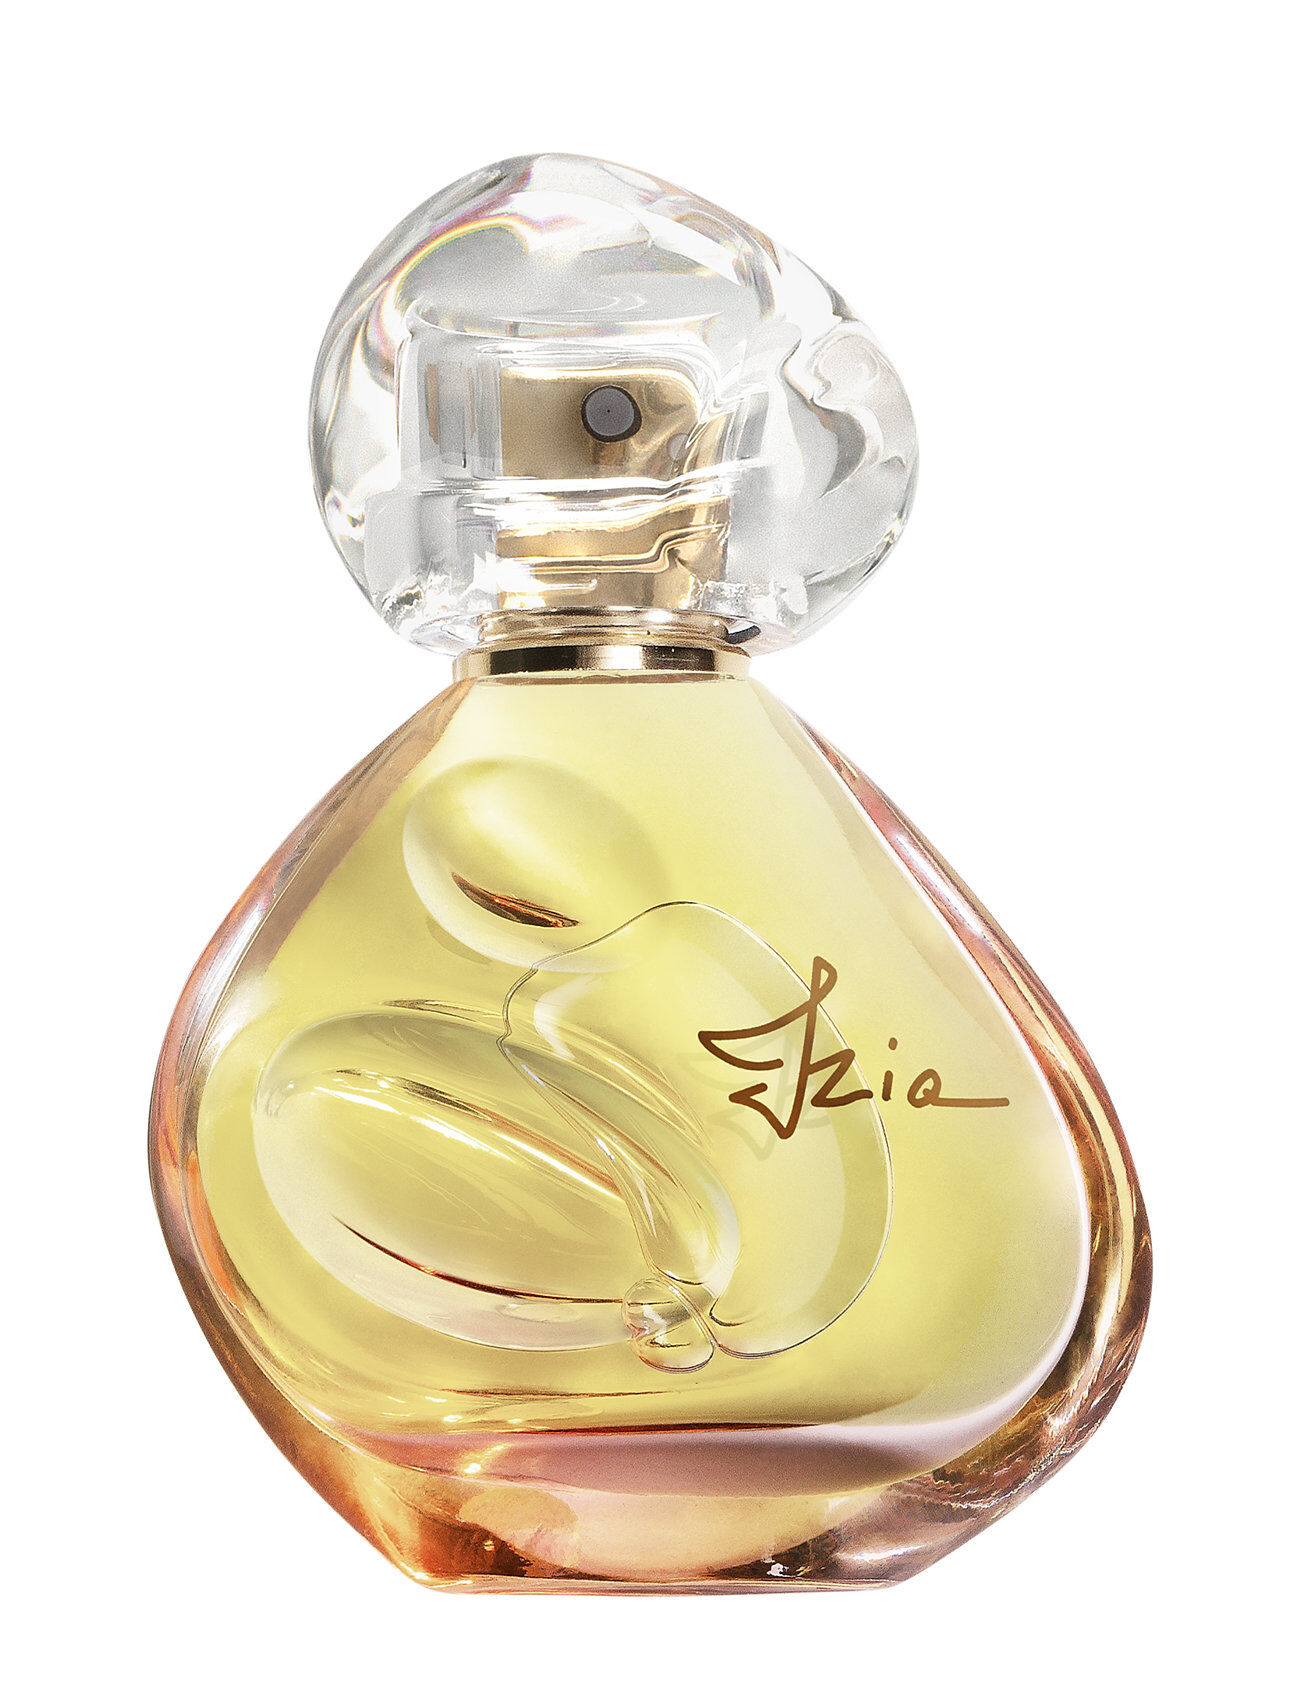 Sisley Izia 30Ml Parfyme Eau De Parfum Nude Sisley